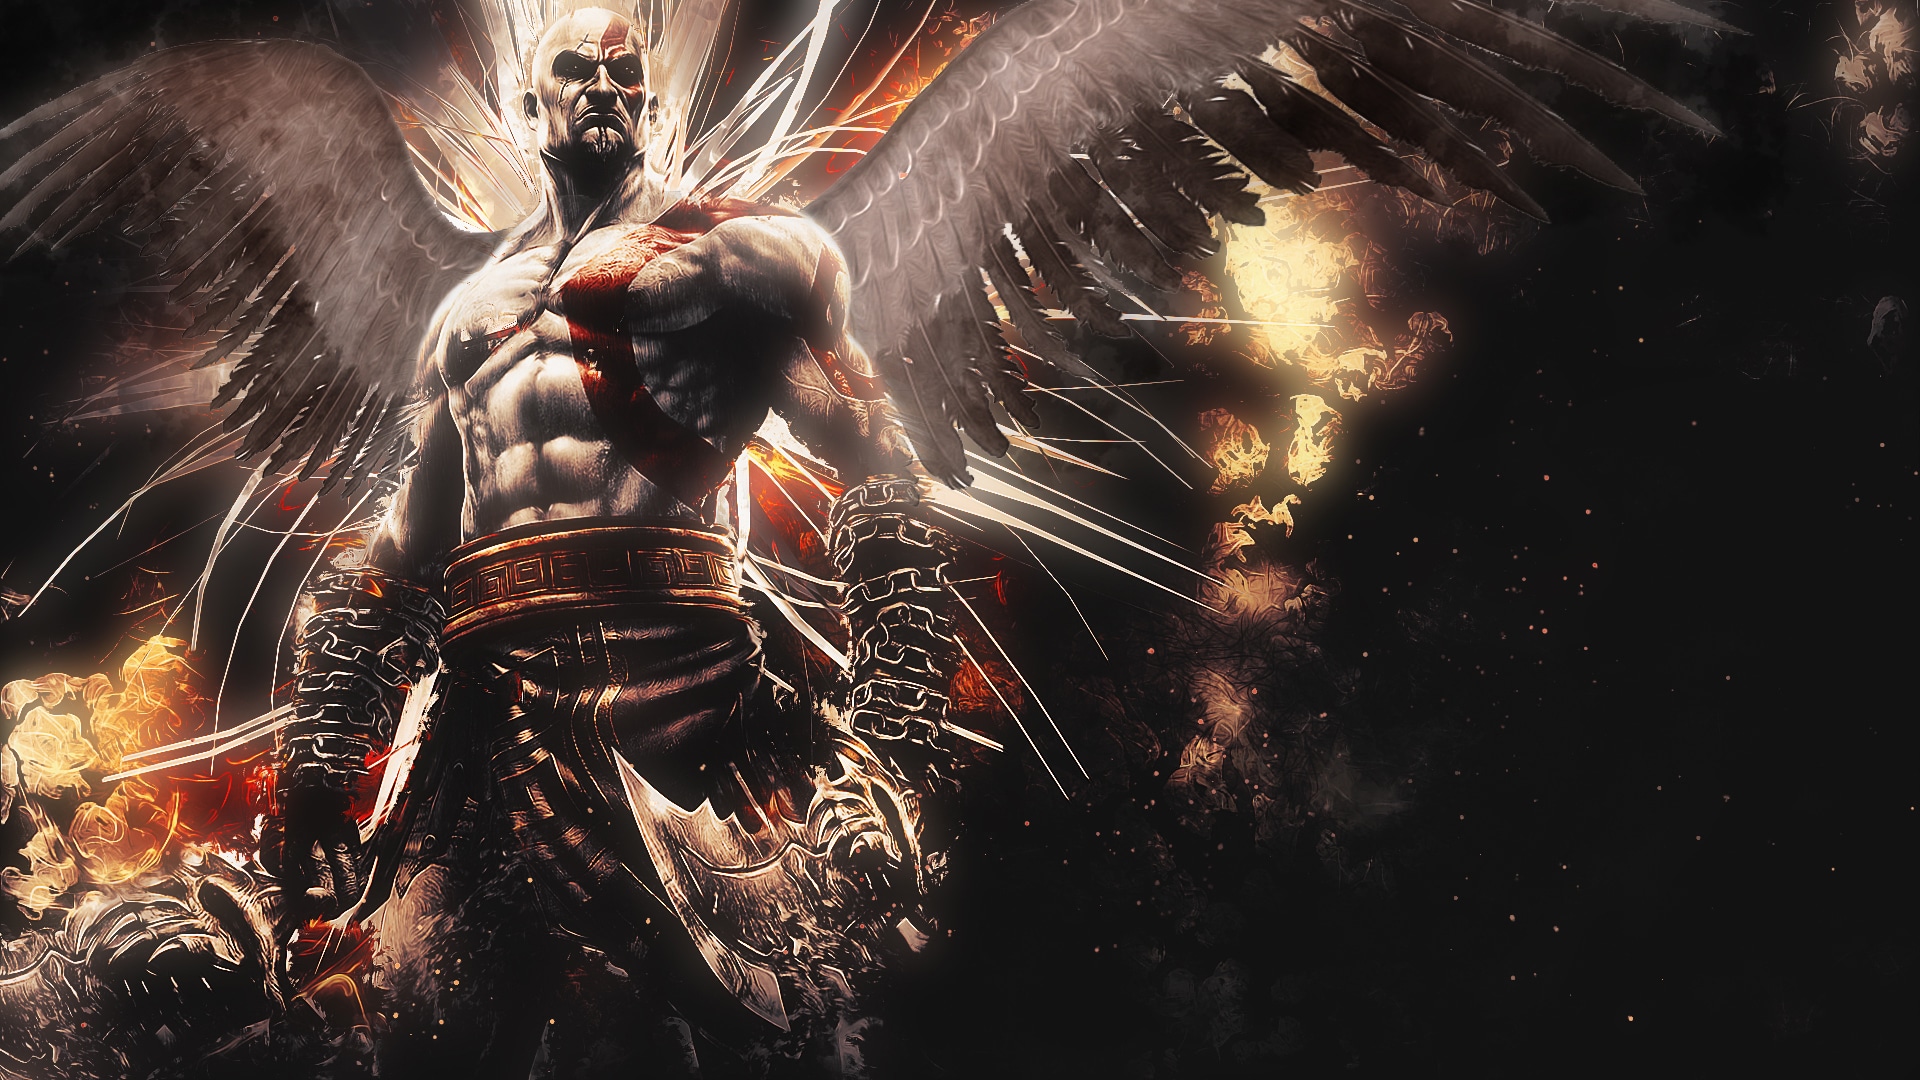 Tiré de la saga "God of War", Kratos symbolise la soif de vengeance, sans foi, ni loi. 